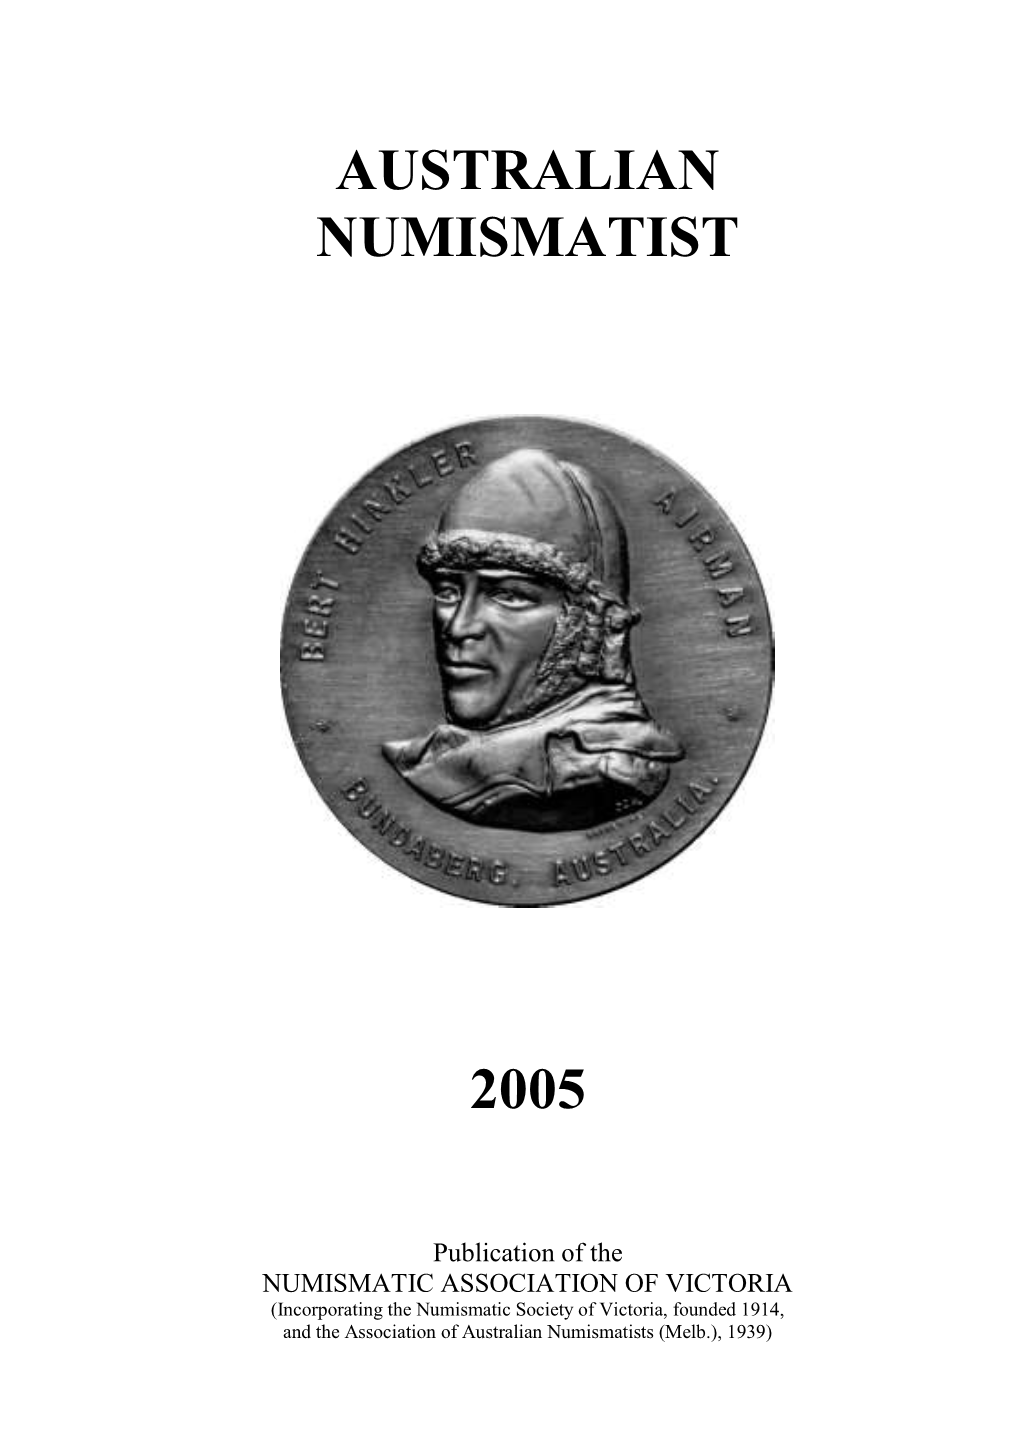 AUSTRALIAN NUMISMATIST 2005 Contents